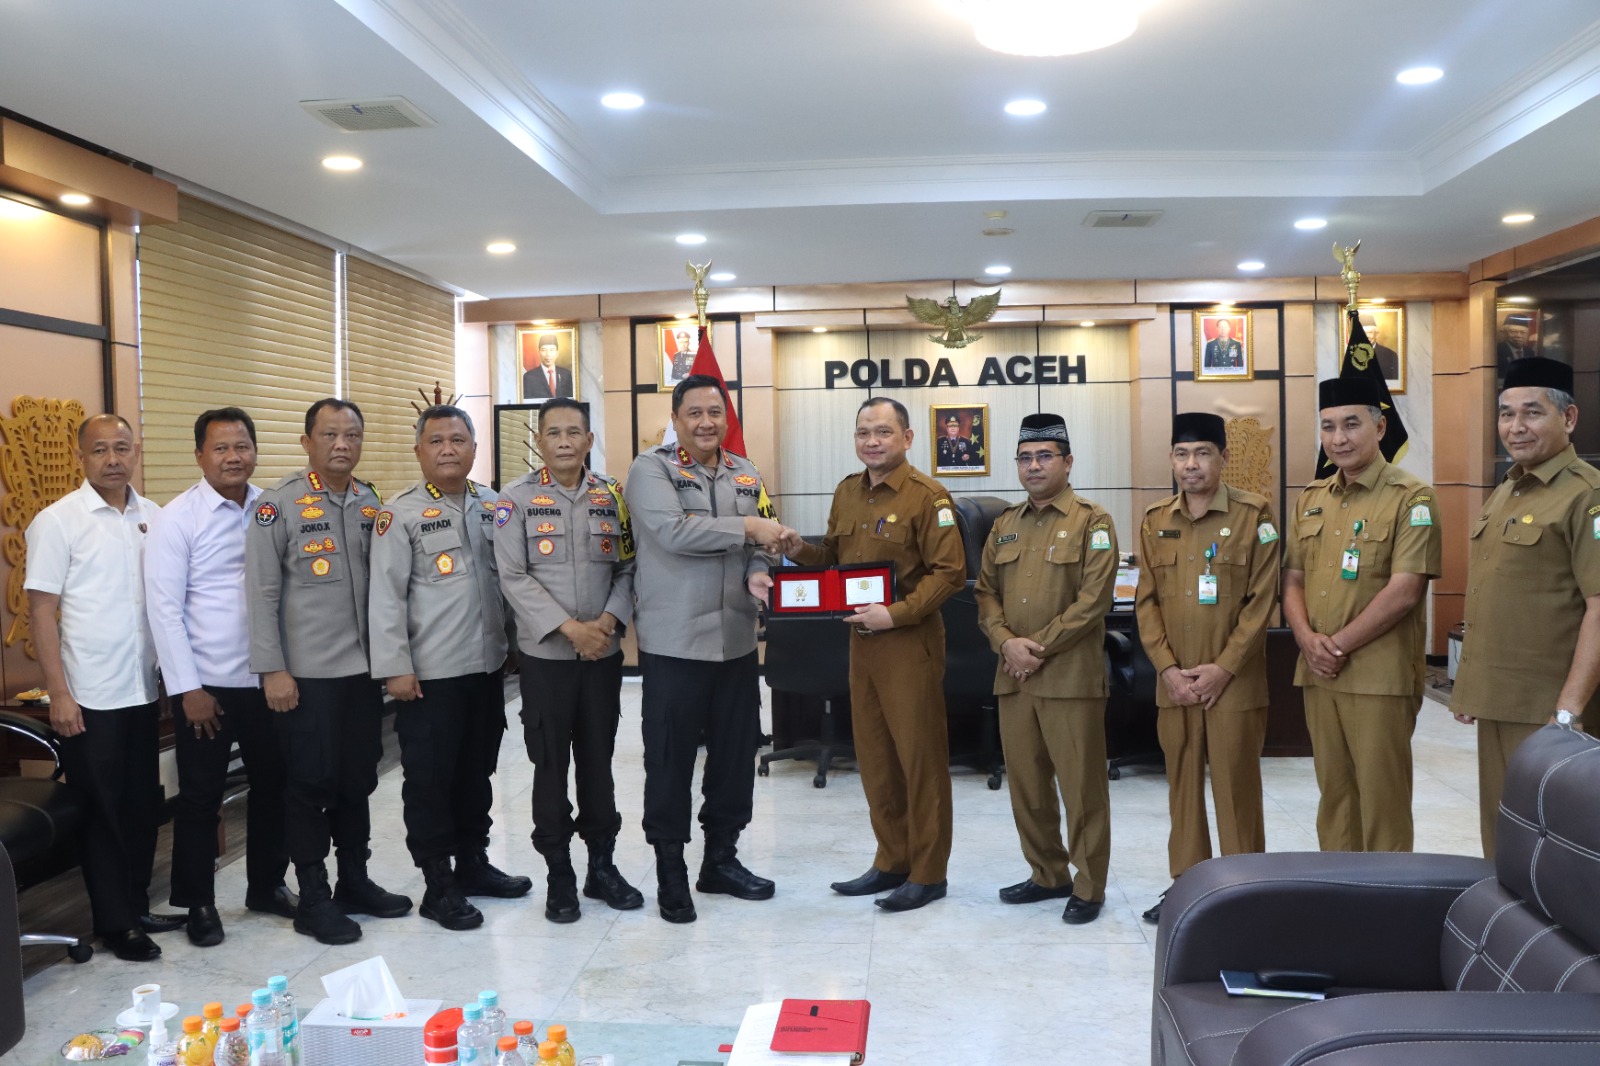 Kapolda Aceh Terima Audiensi Kepala Dinas Pendidikan Dayah